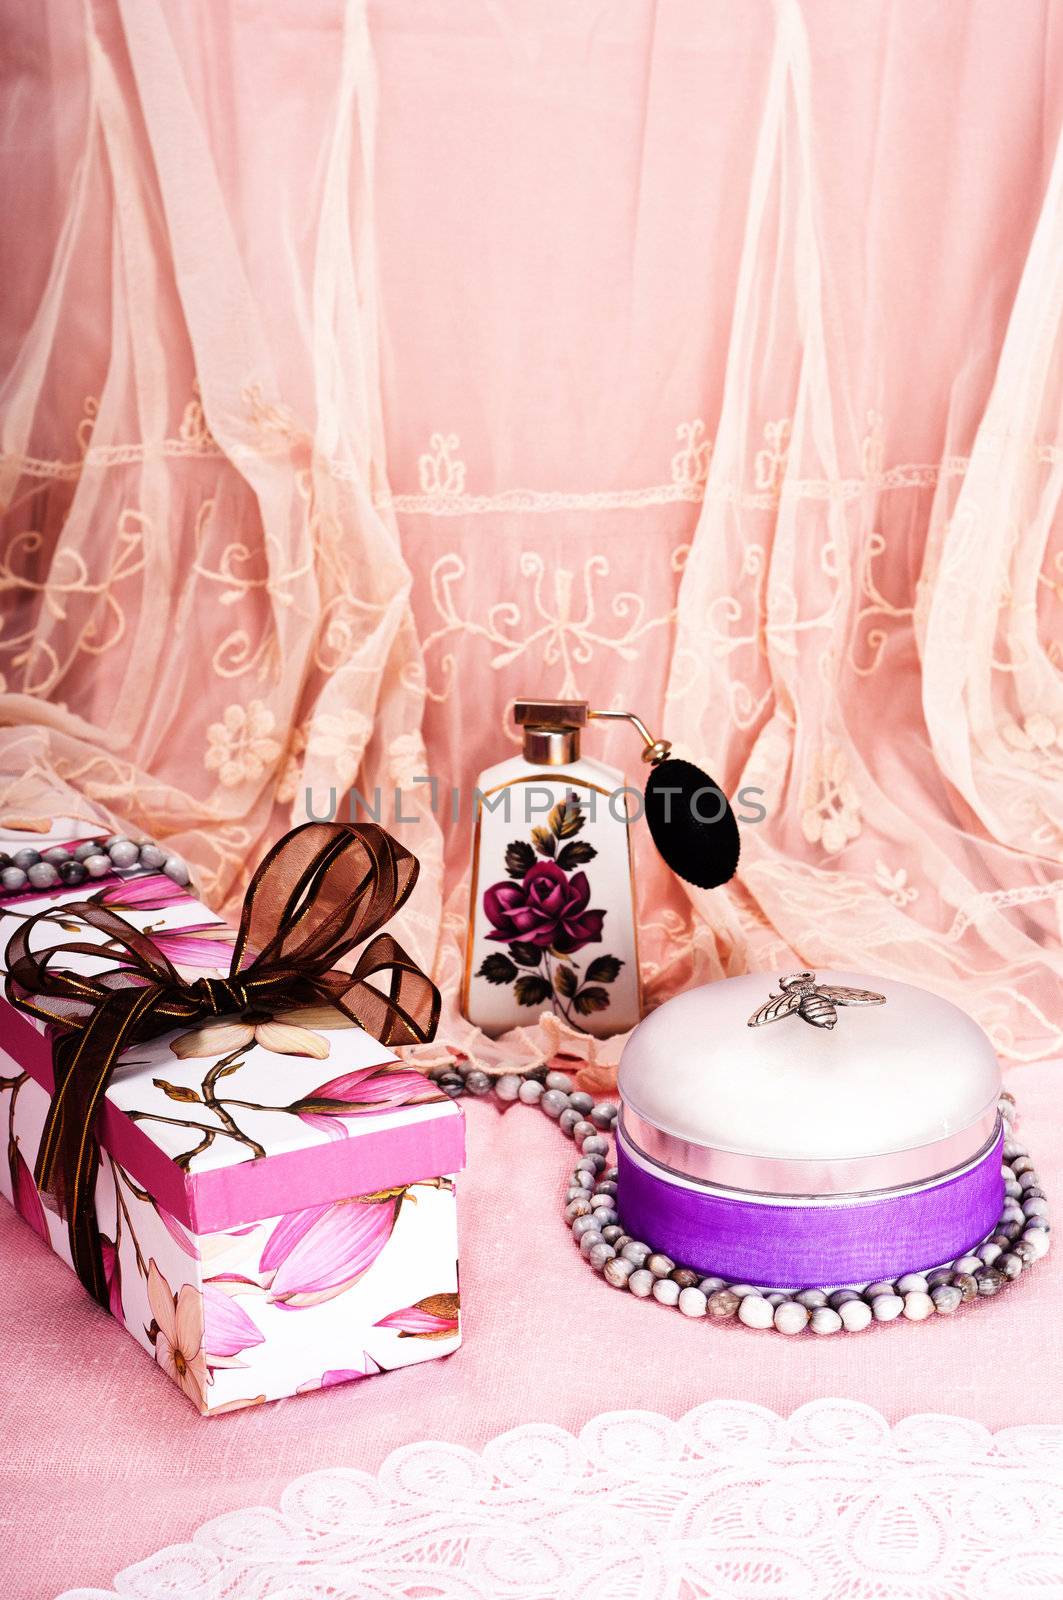 Feminine birthday or holiday celebration with gift box, perfume and talcum powder